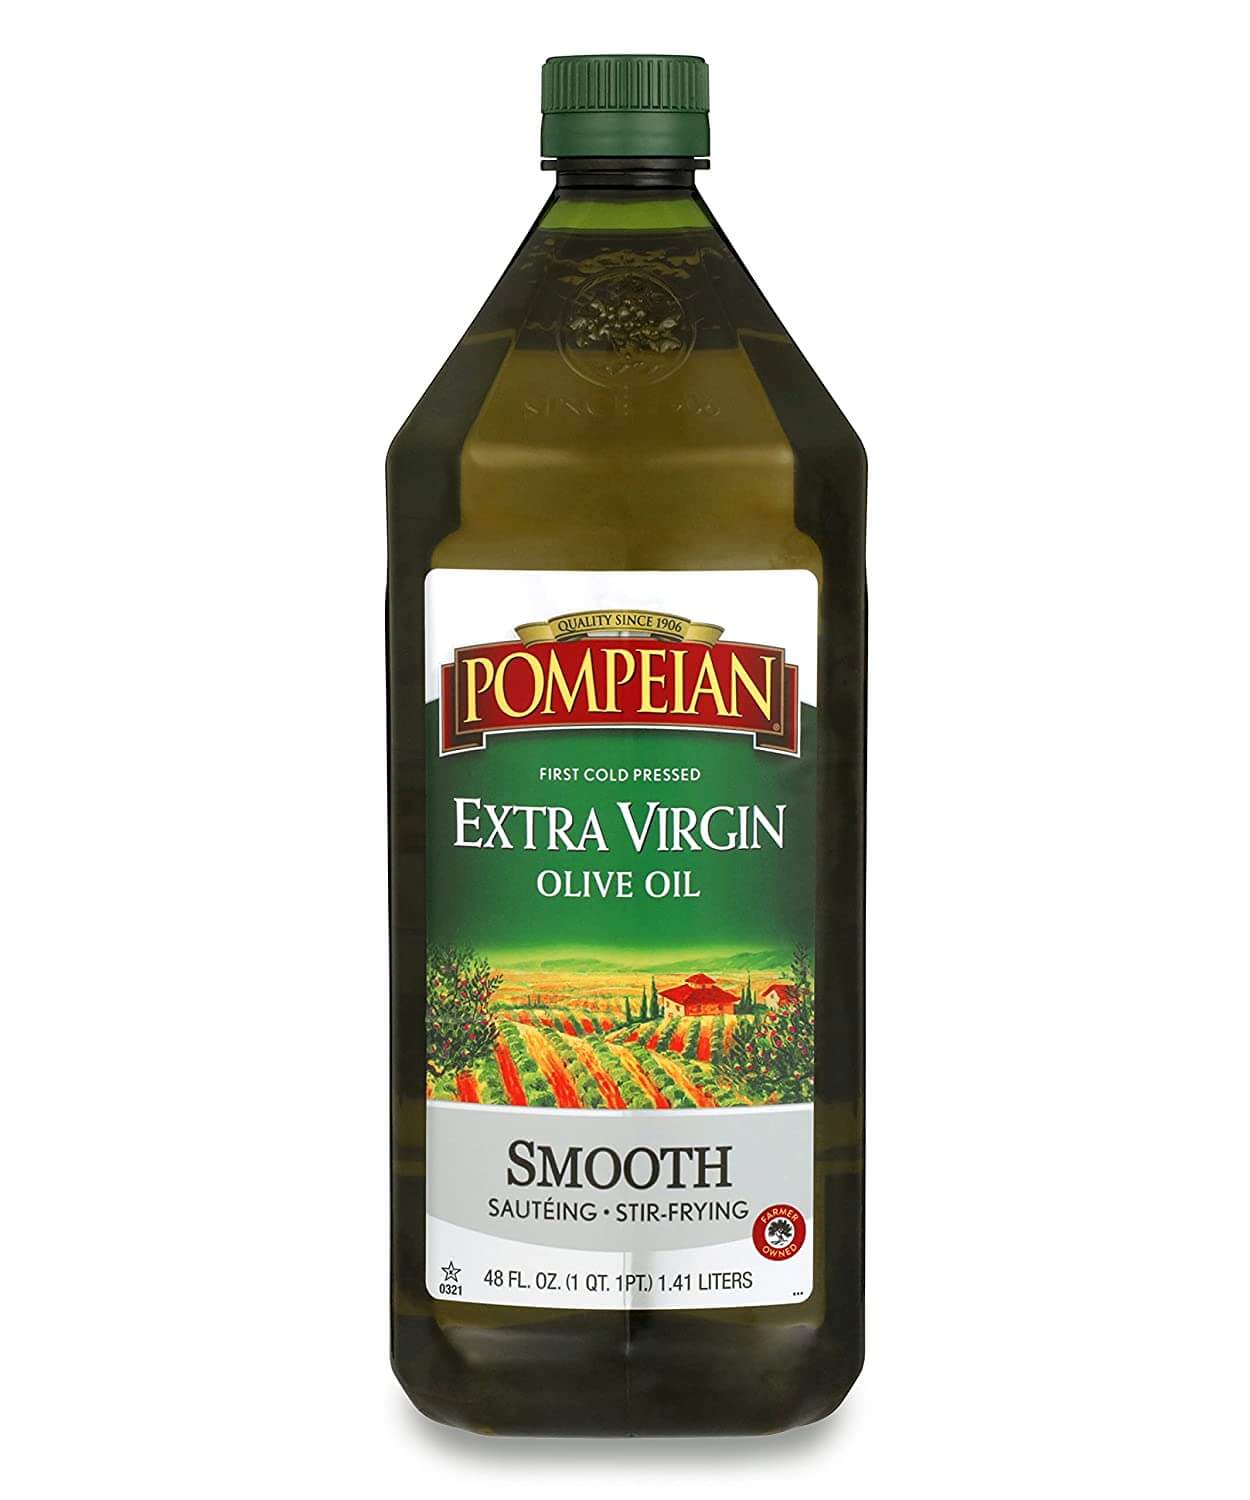 Pompeian olive oil